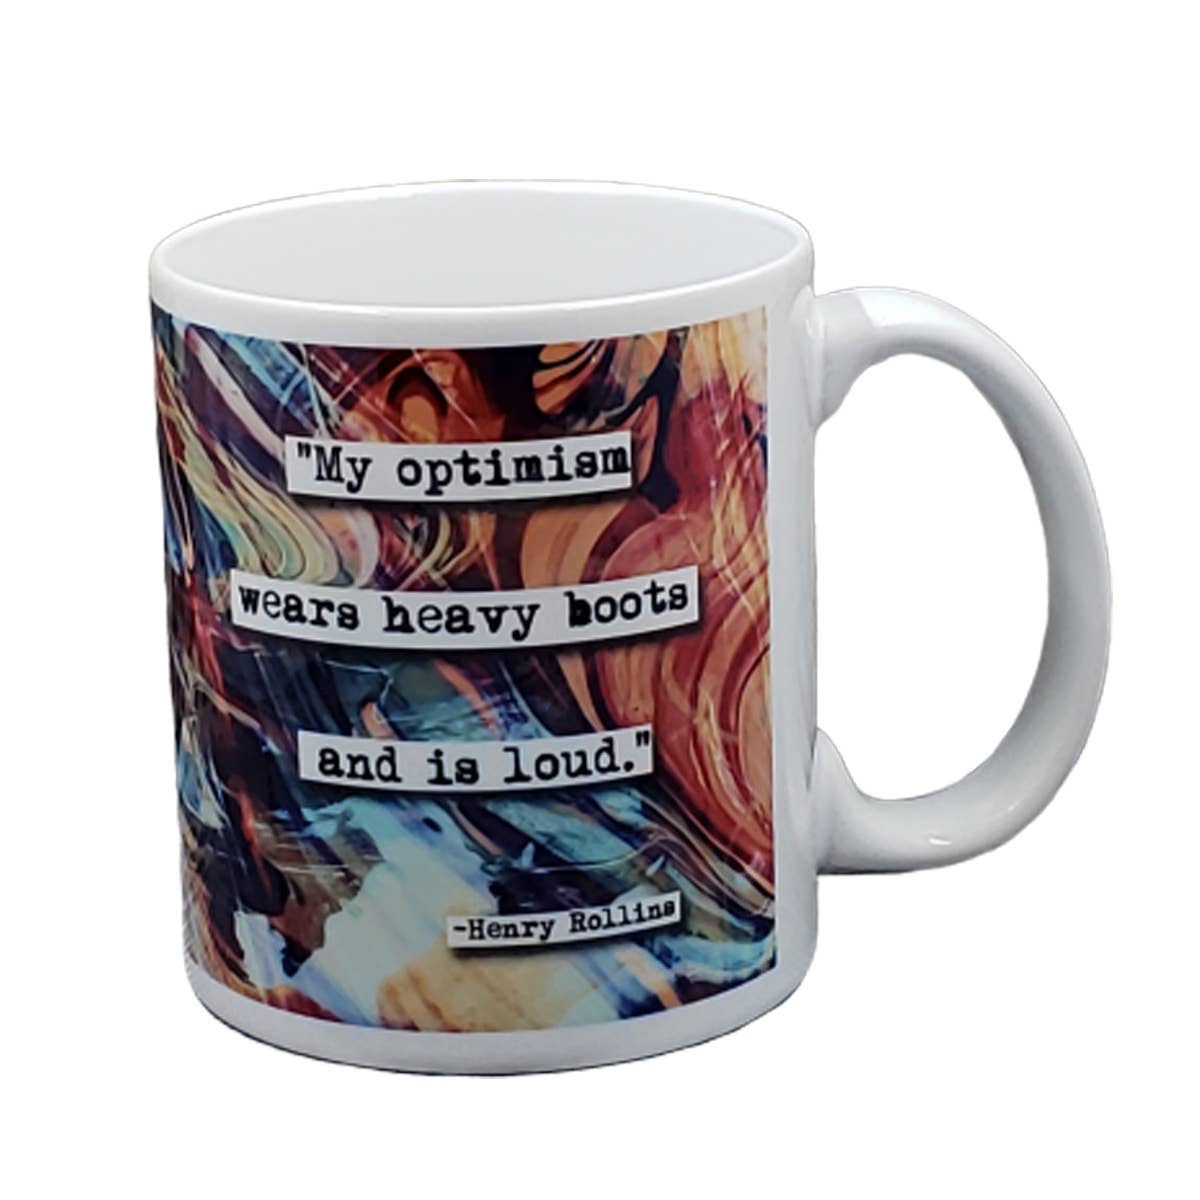 Henry Rollins Optimism Quote Coffee Mug